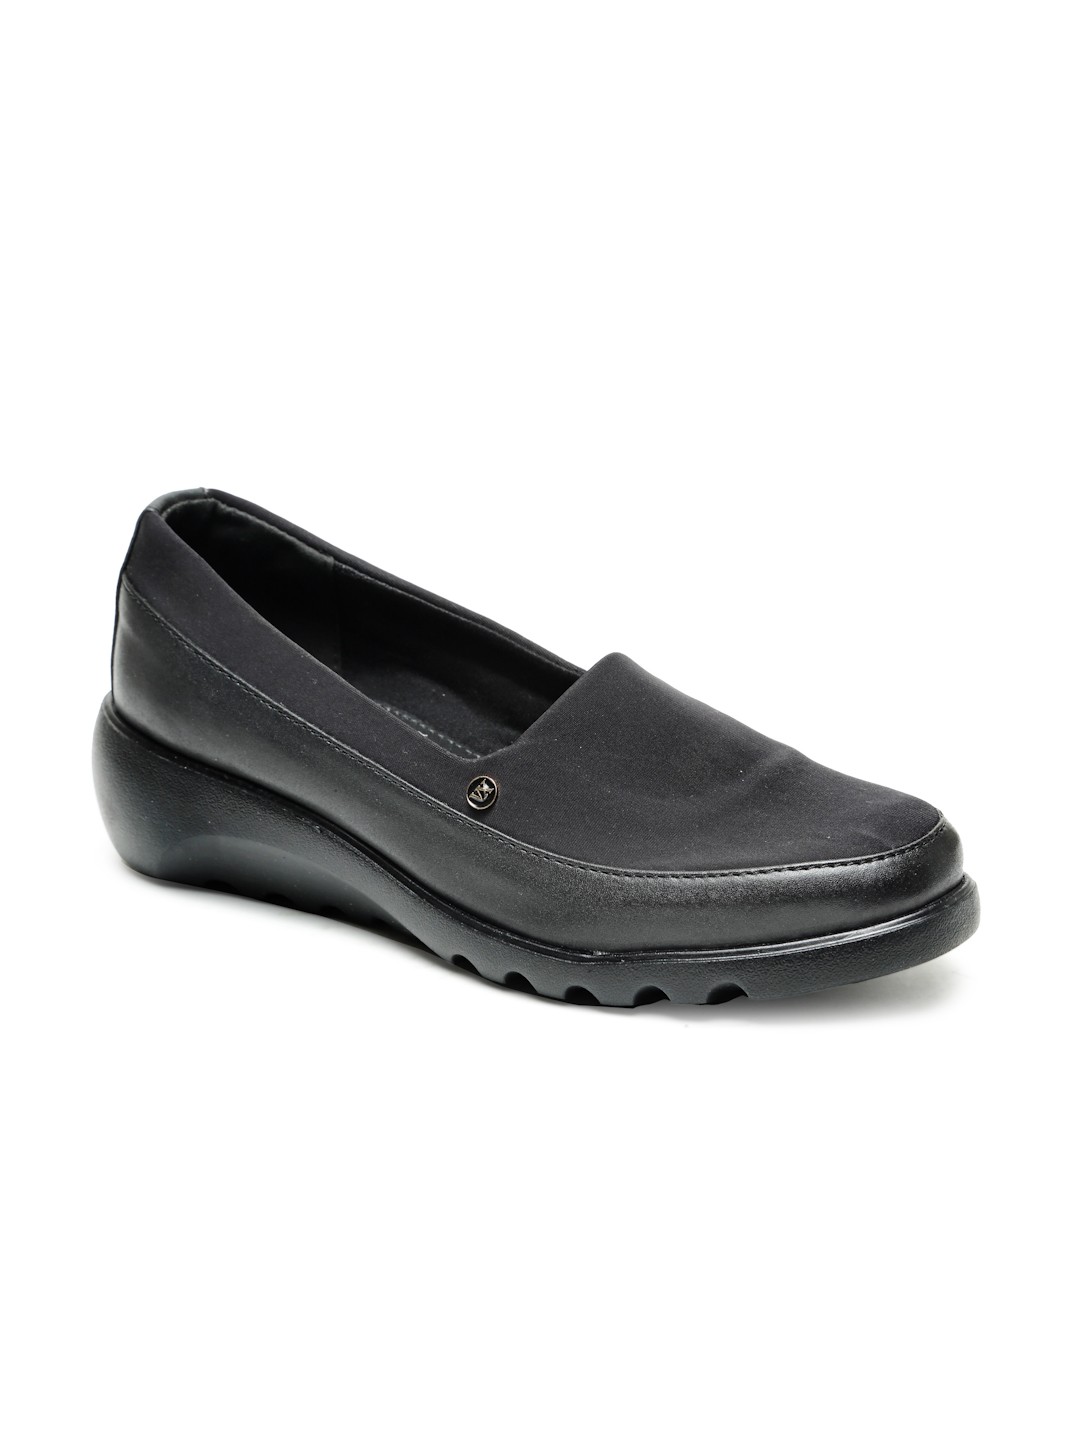 Buy Von Wellx Germany Comfort Women's Black Casual Shoes Elsa Online in Udaipur